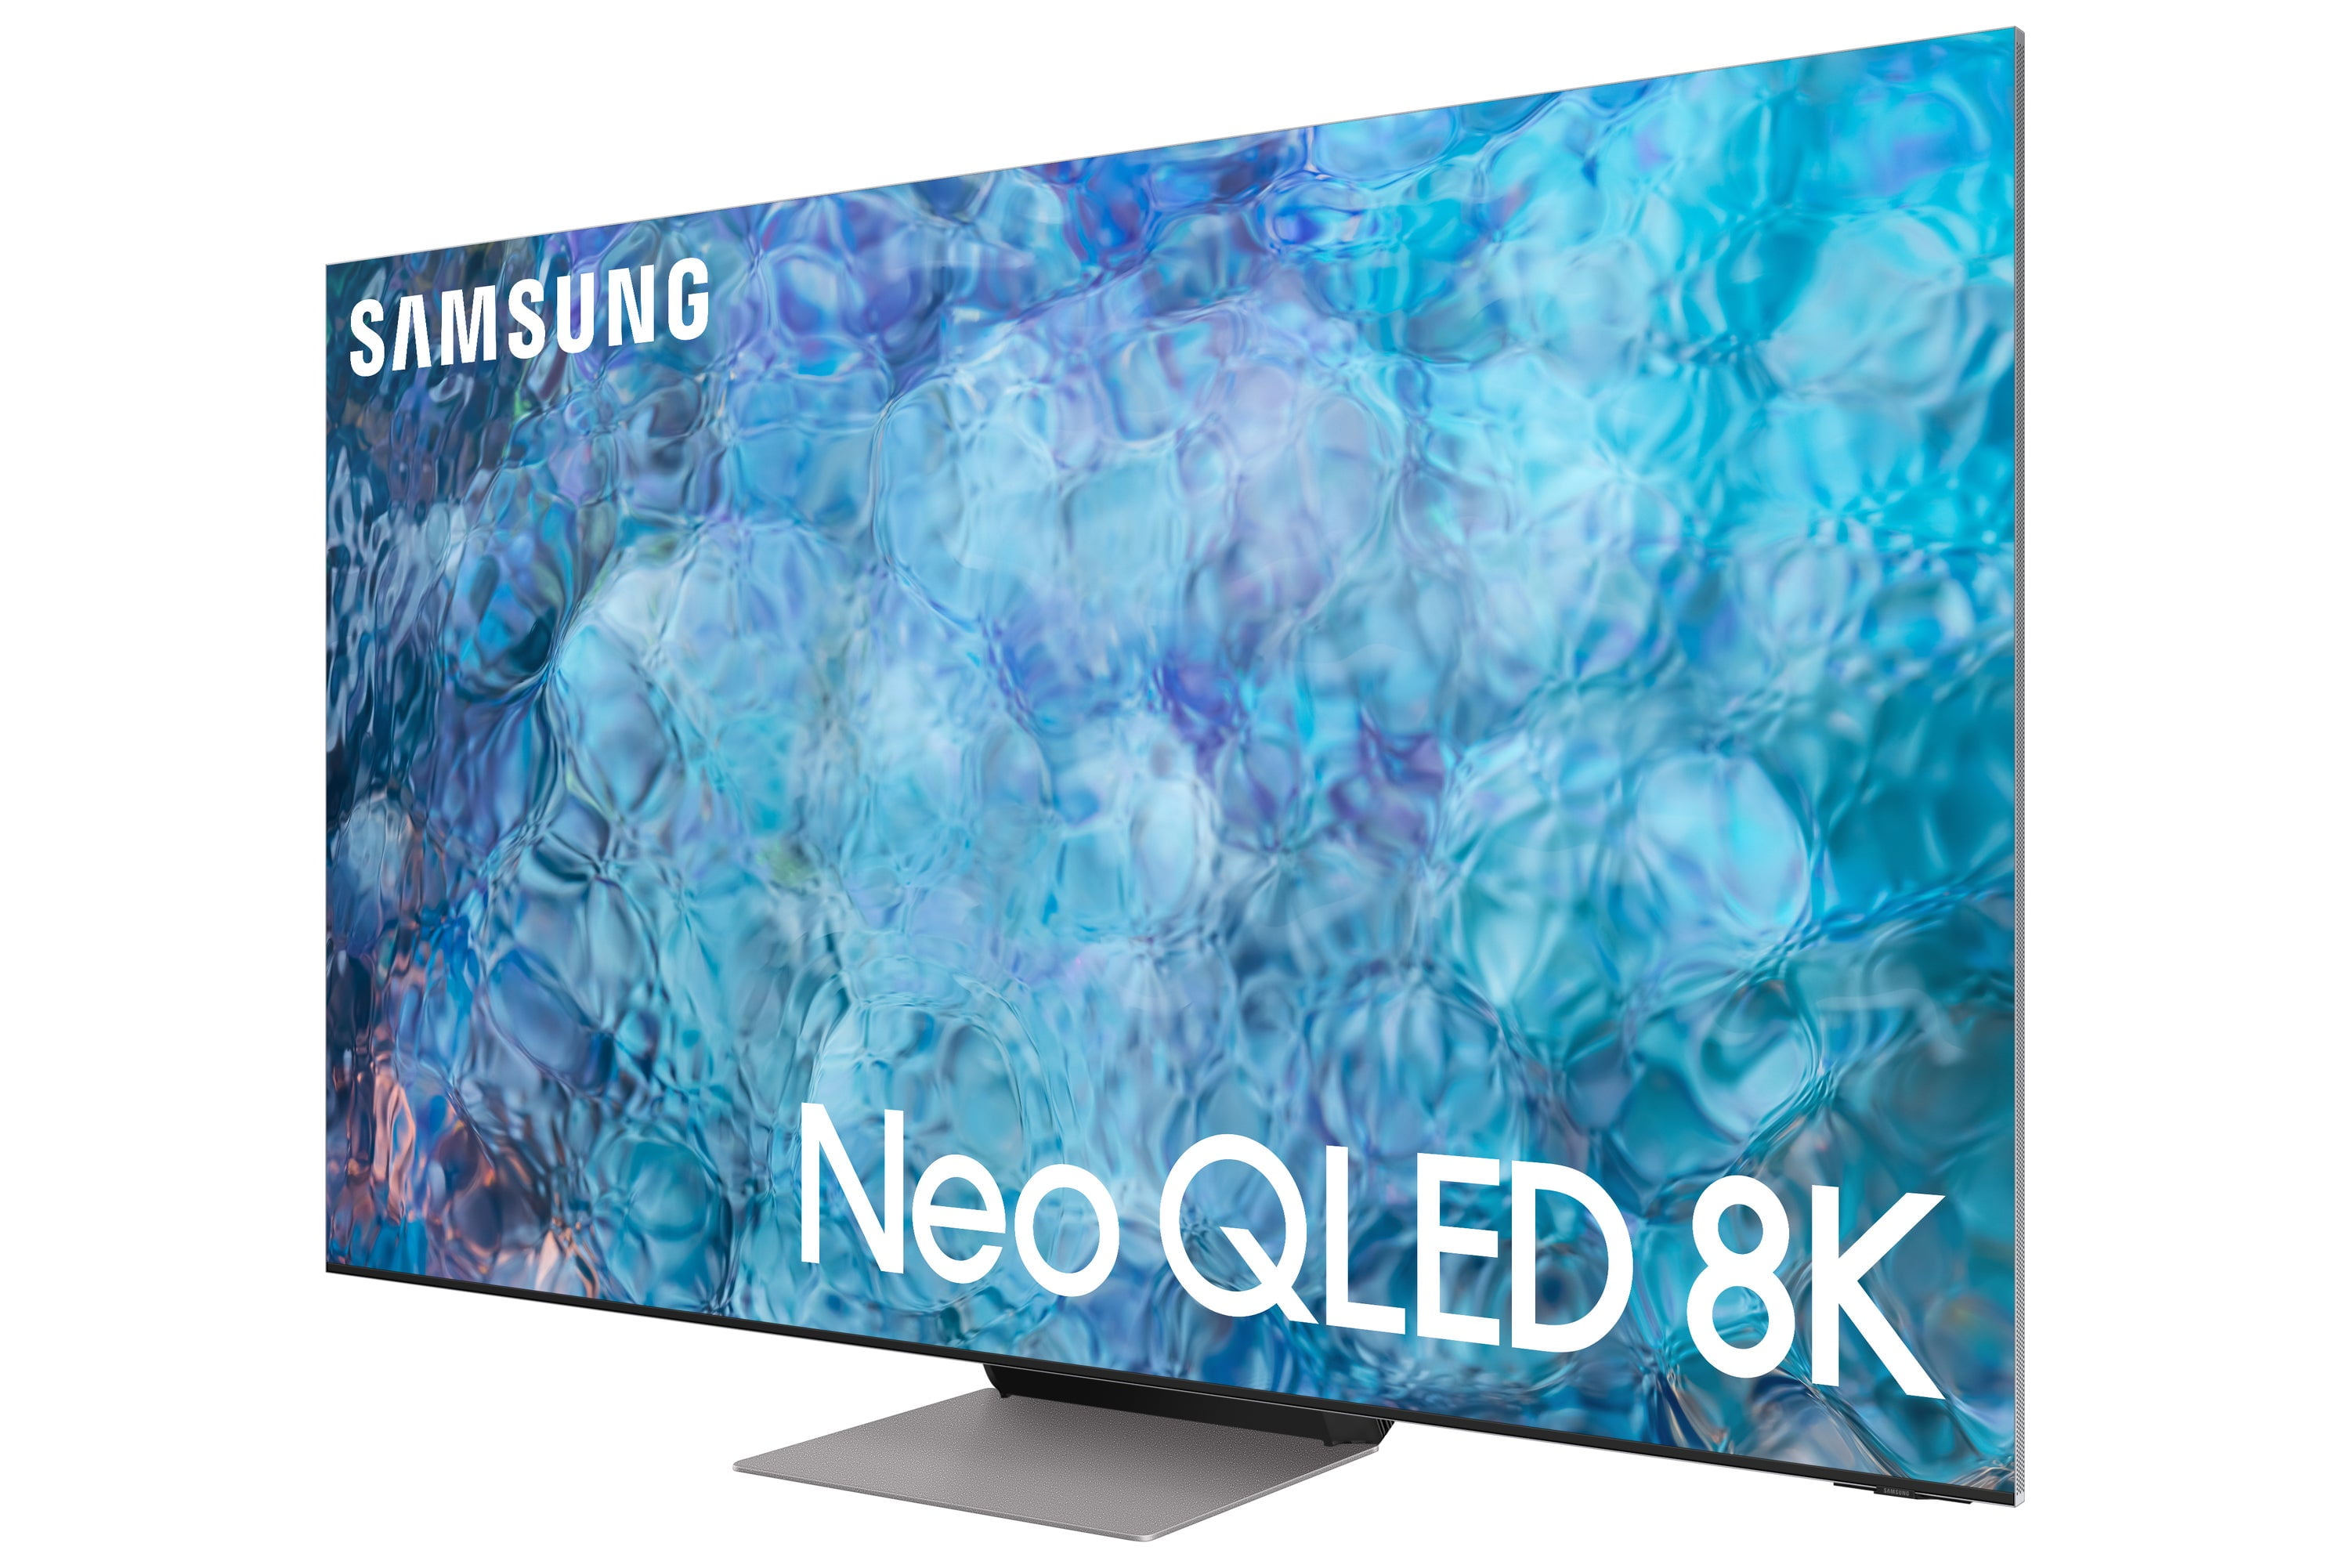 Samsung 8k купить. Samsung Neo qn900a. Qn900a Neo QLED 8k. Qn900a Neo QLED 8k Smart TV 2021.